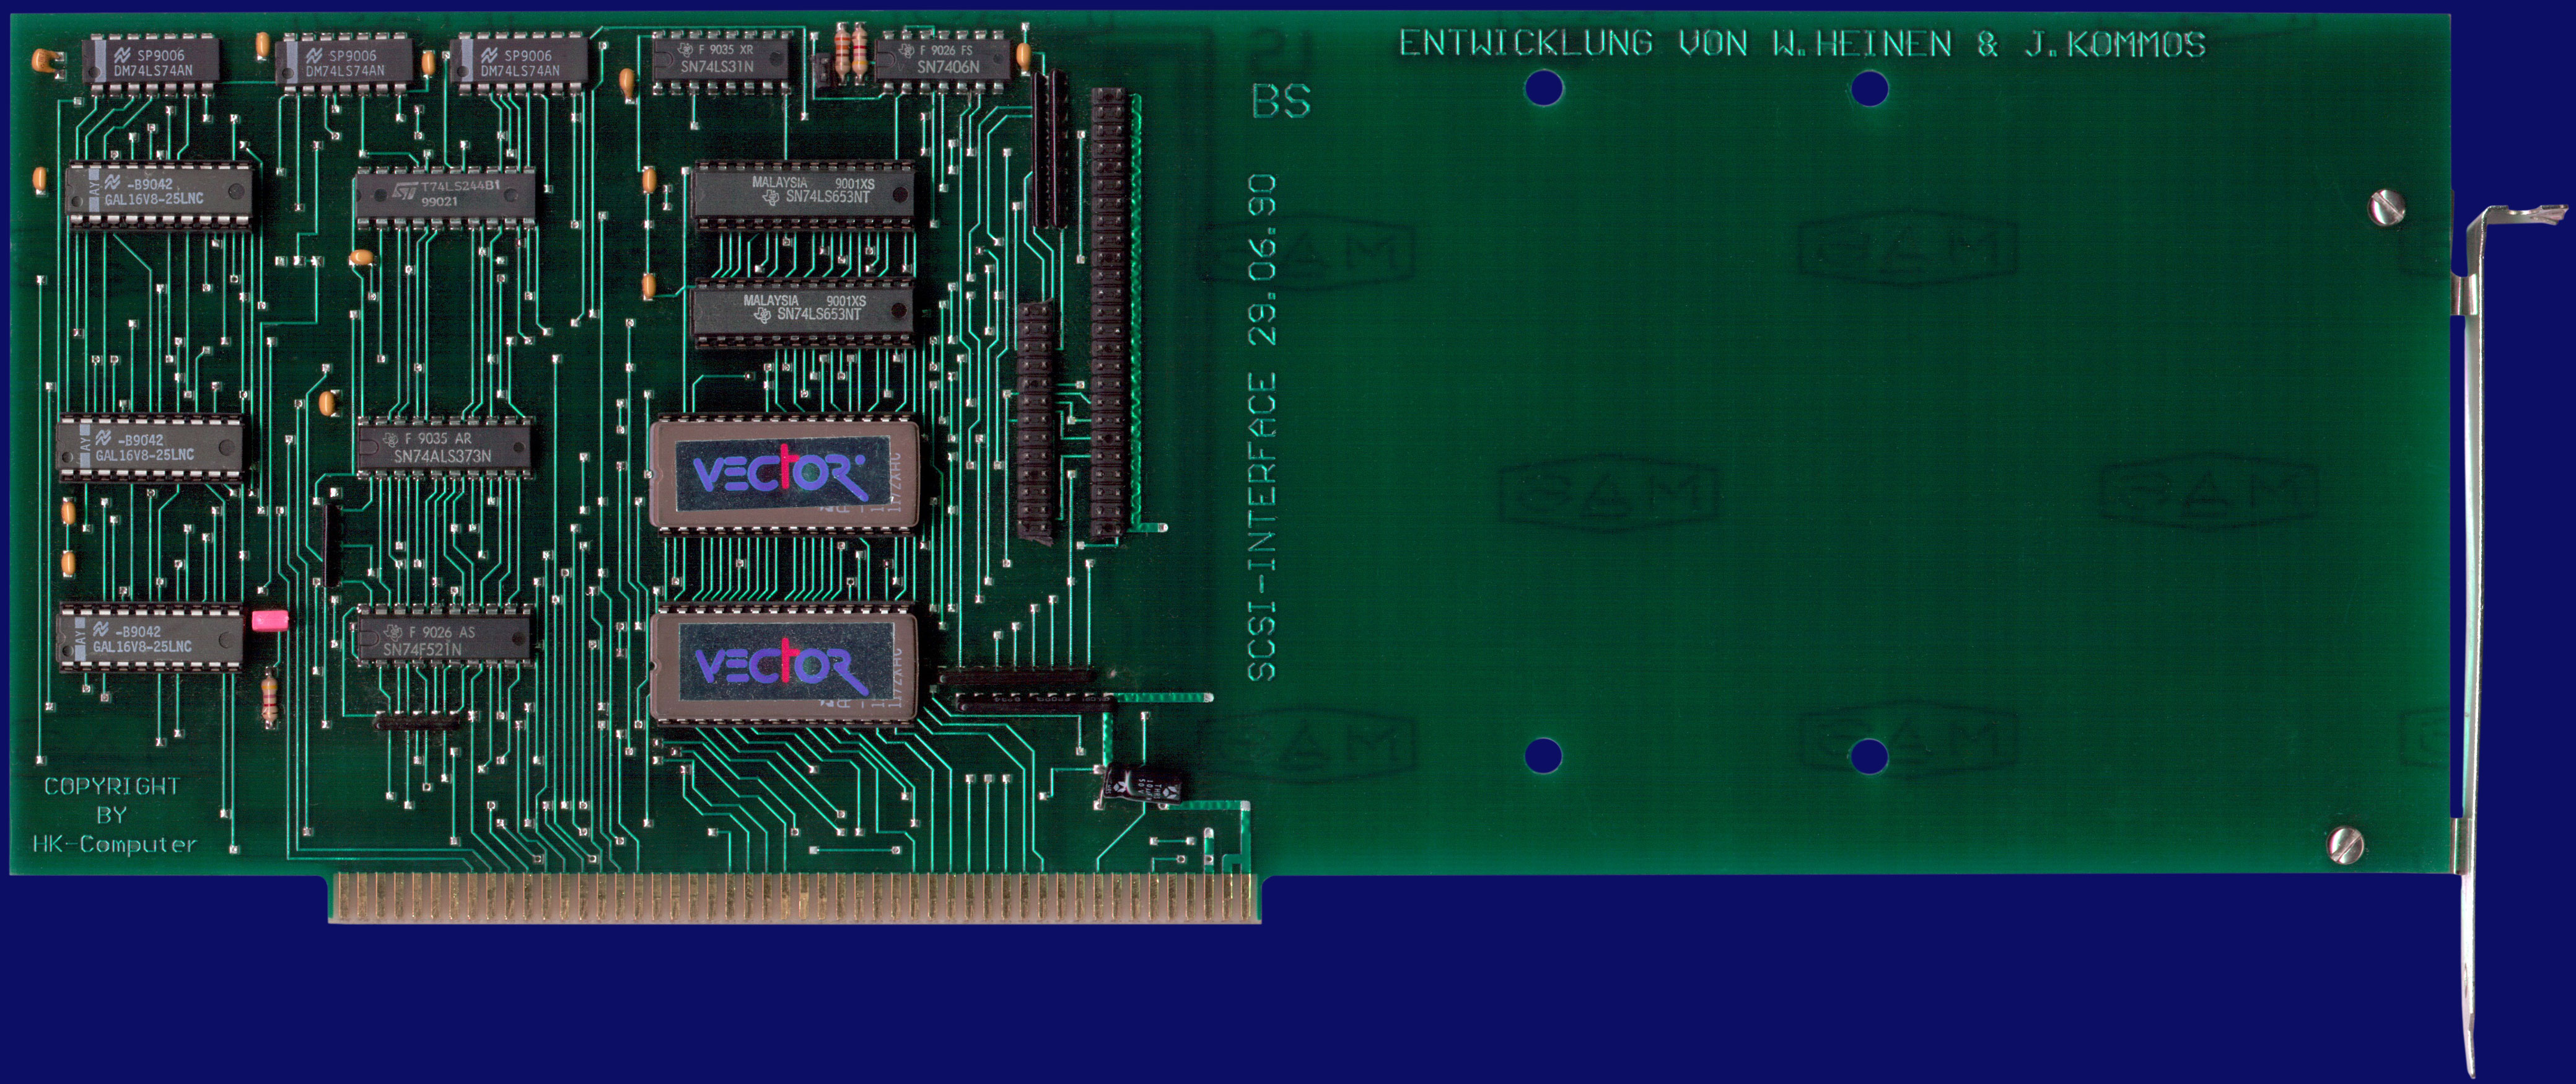 HK-Computer Vector SCSI & Professional SCSI - Vorderseite